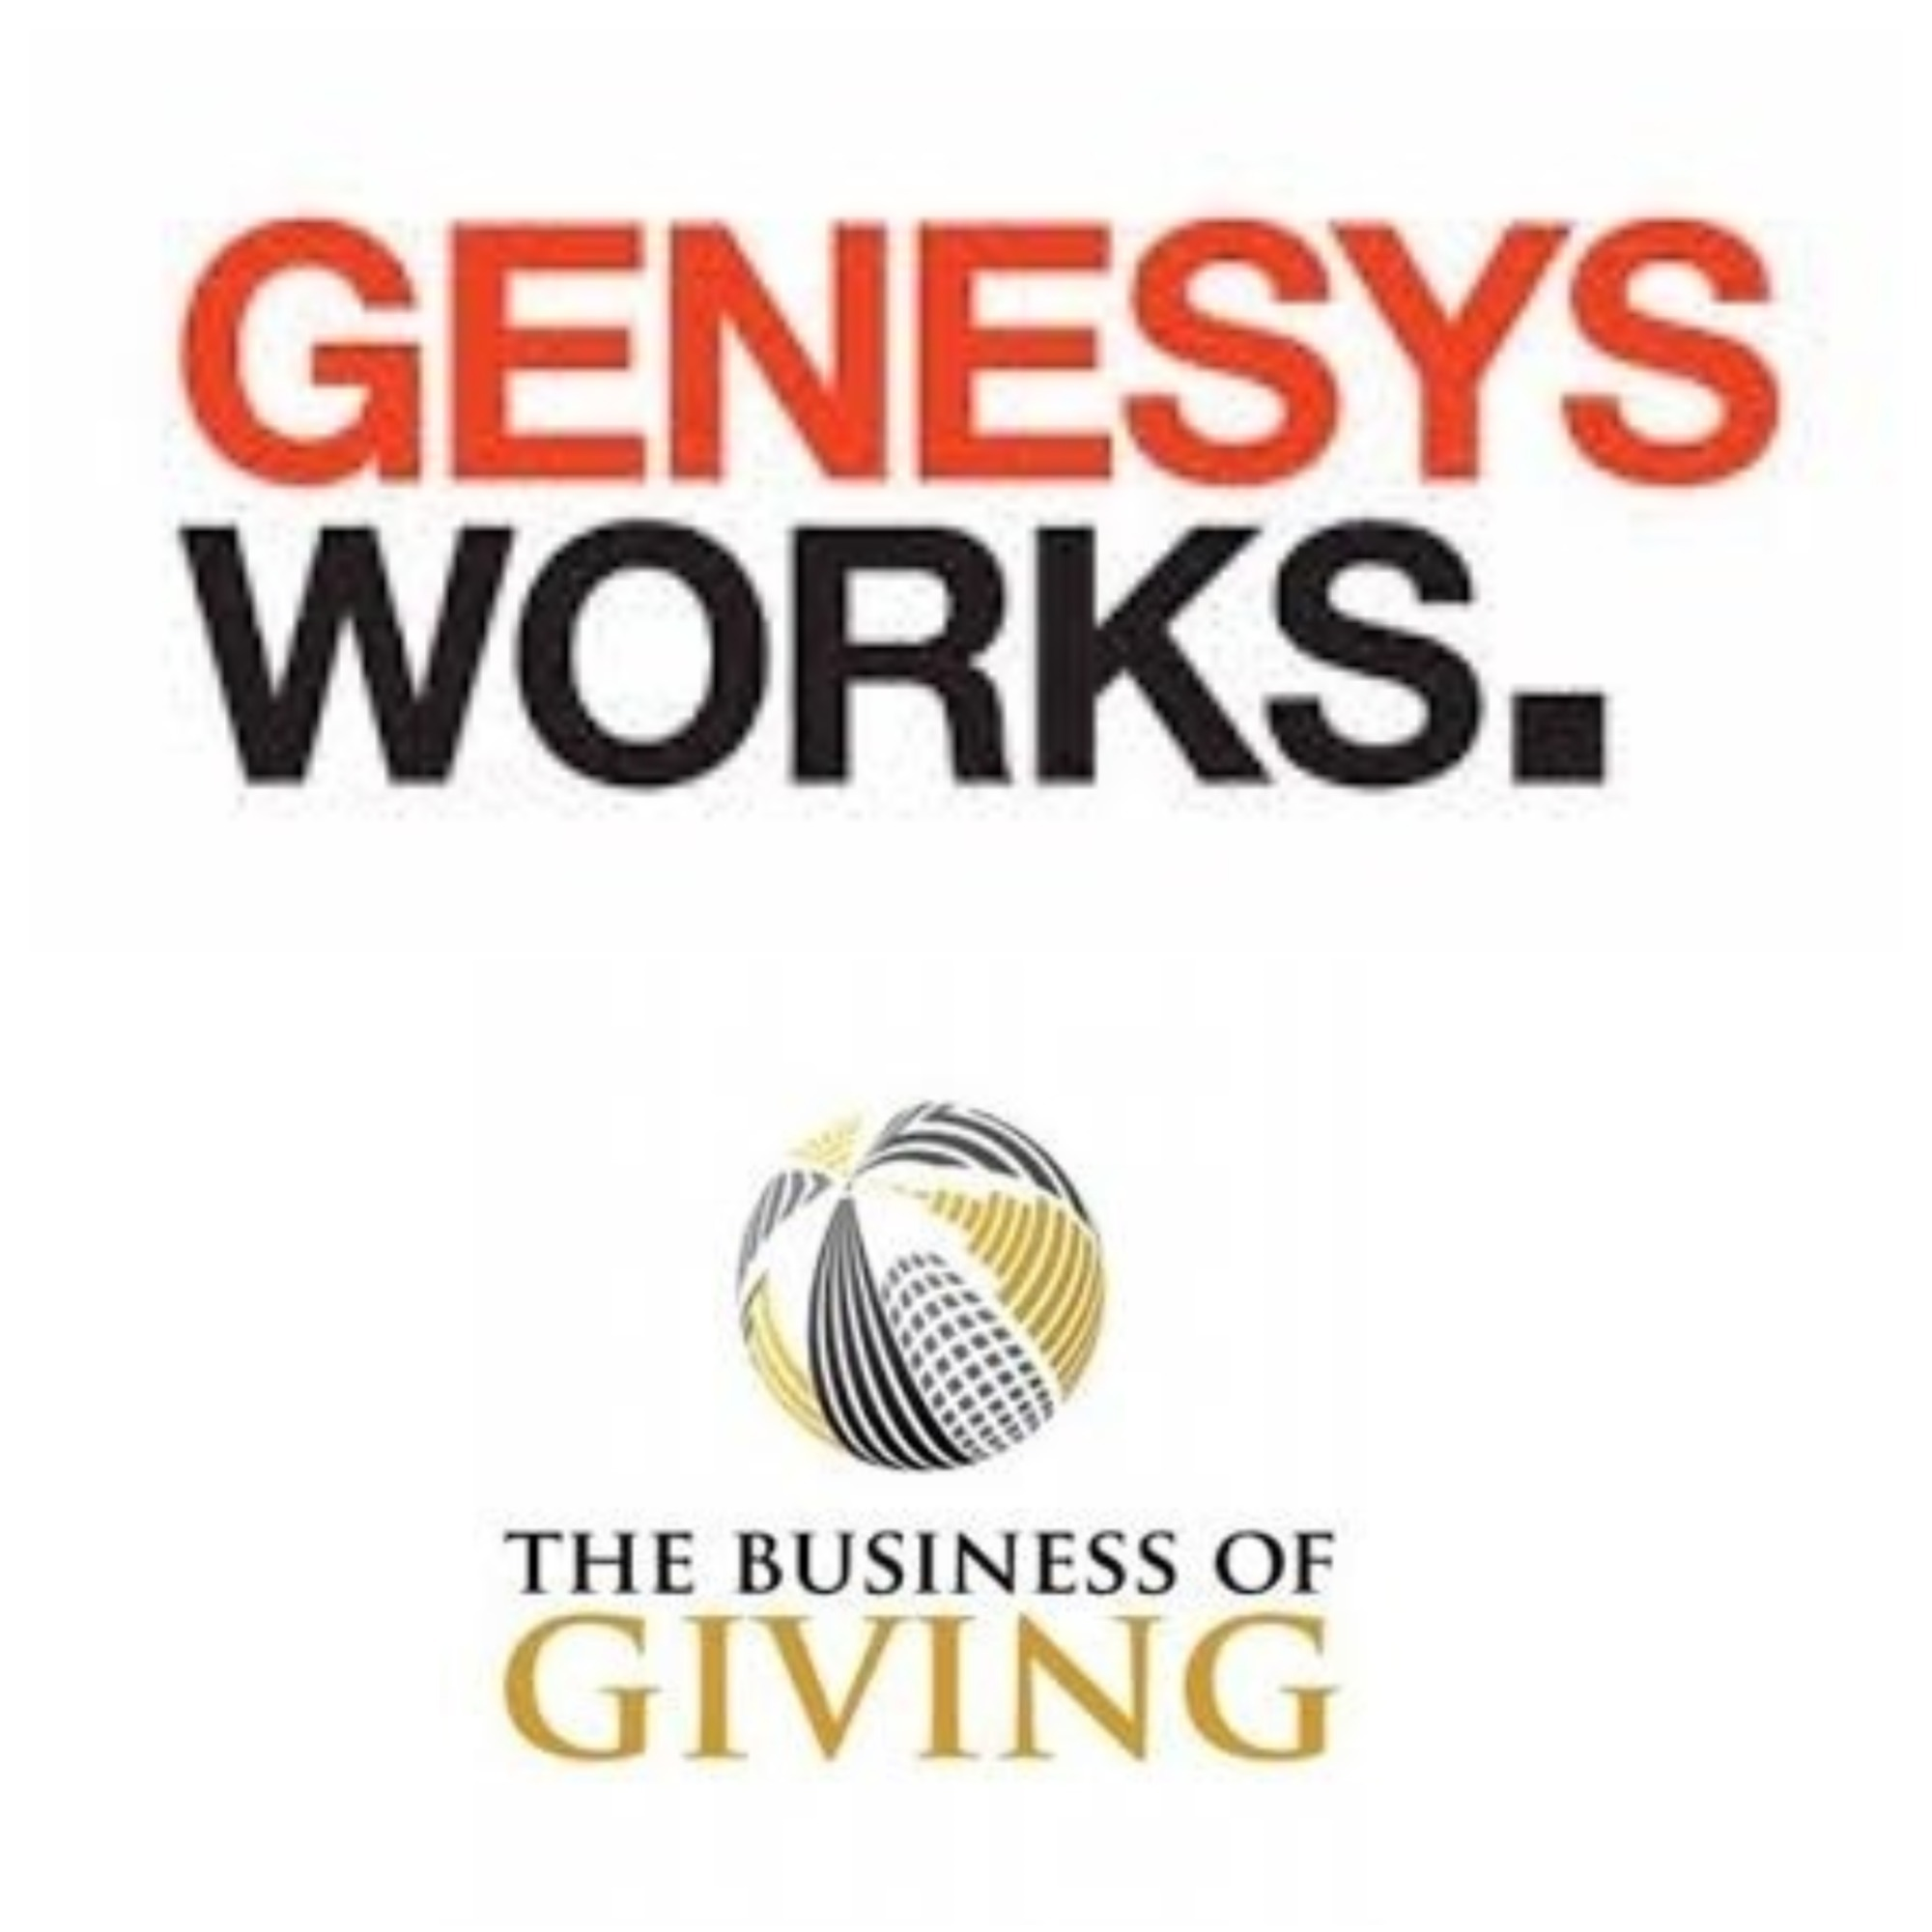  Rafael Alvarez, Founder and CEO, Genesys Works